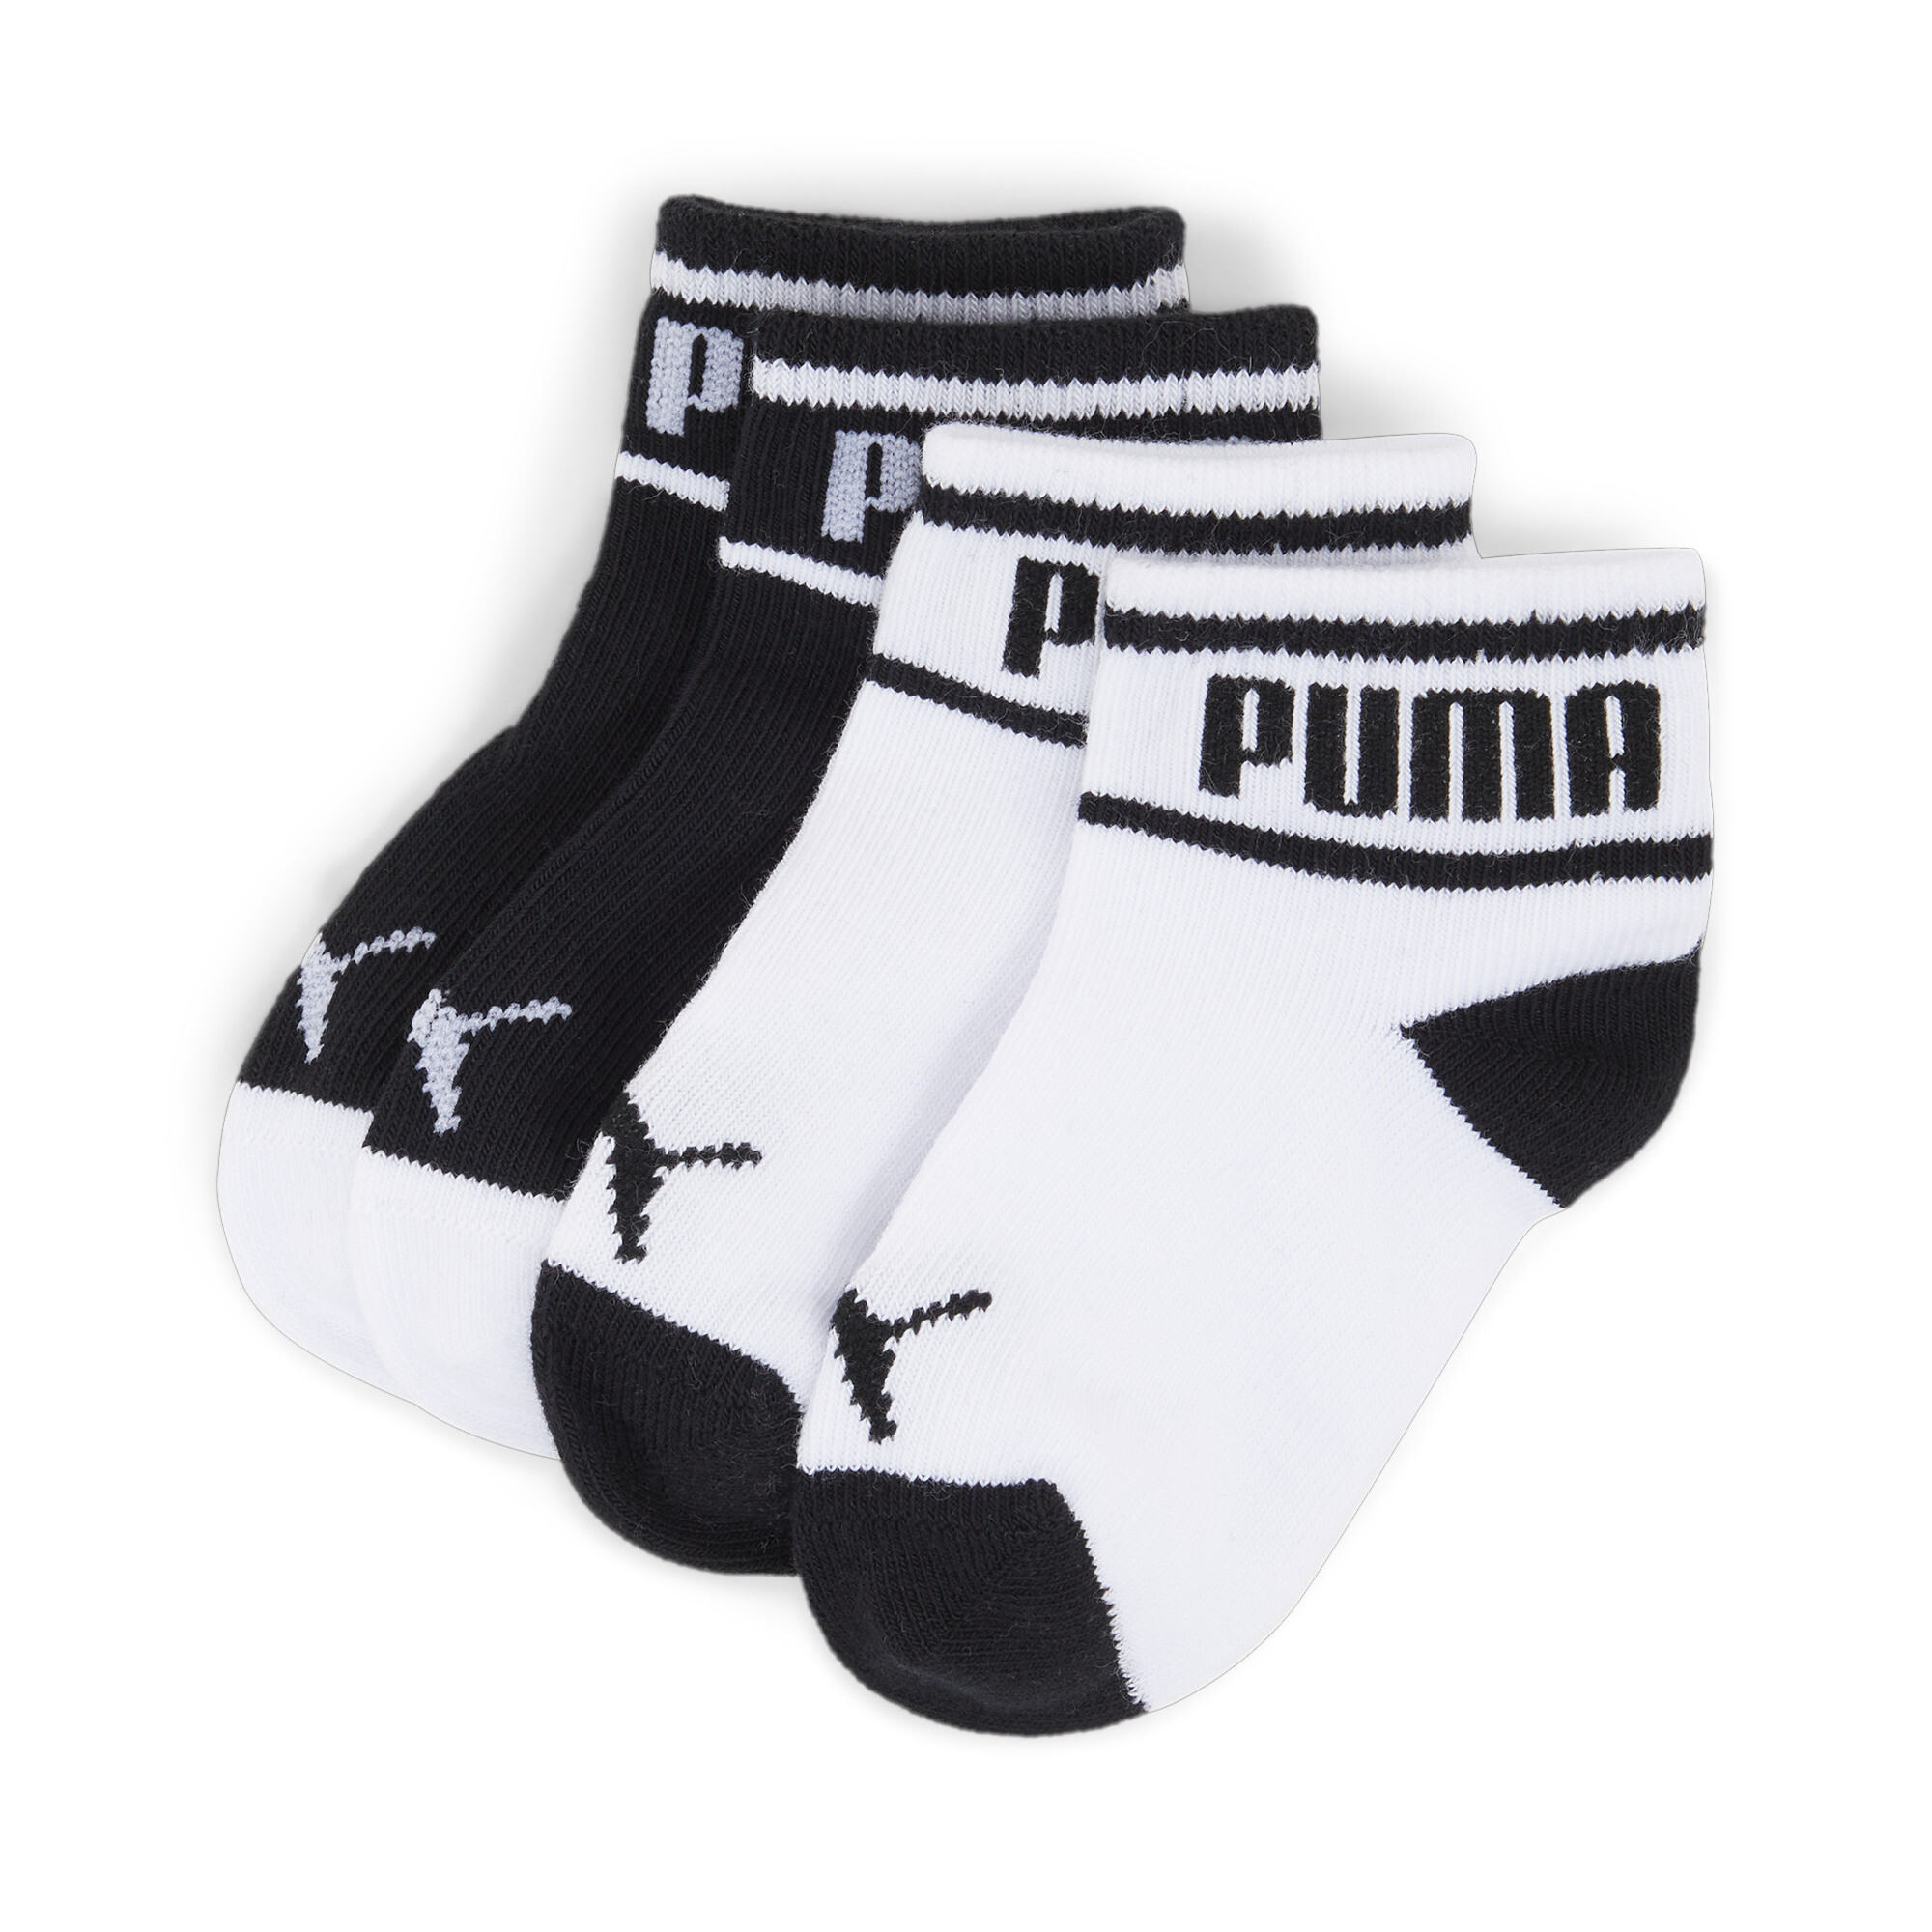 Puma Baby Word Lifestyle Socks 2 Pack, Size 15-18, Age